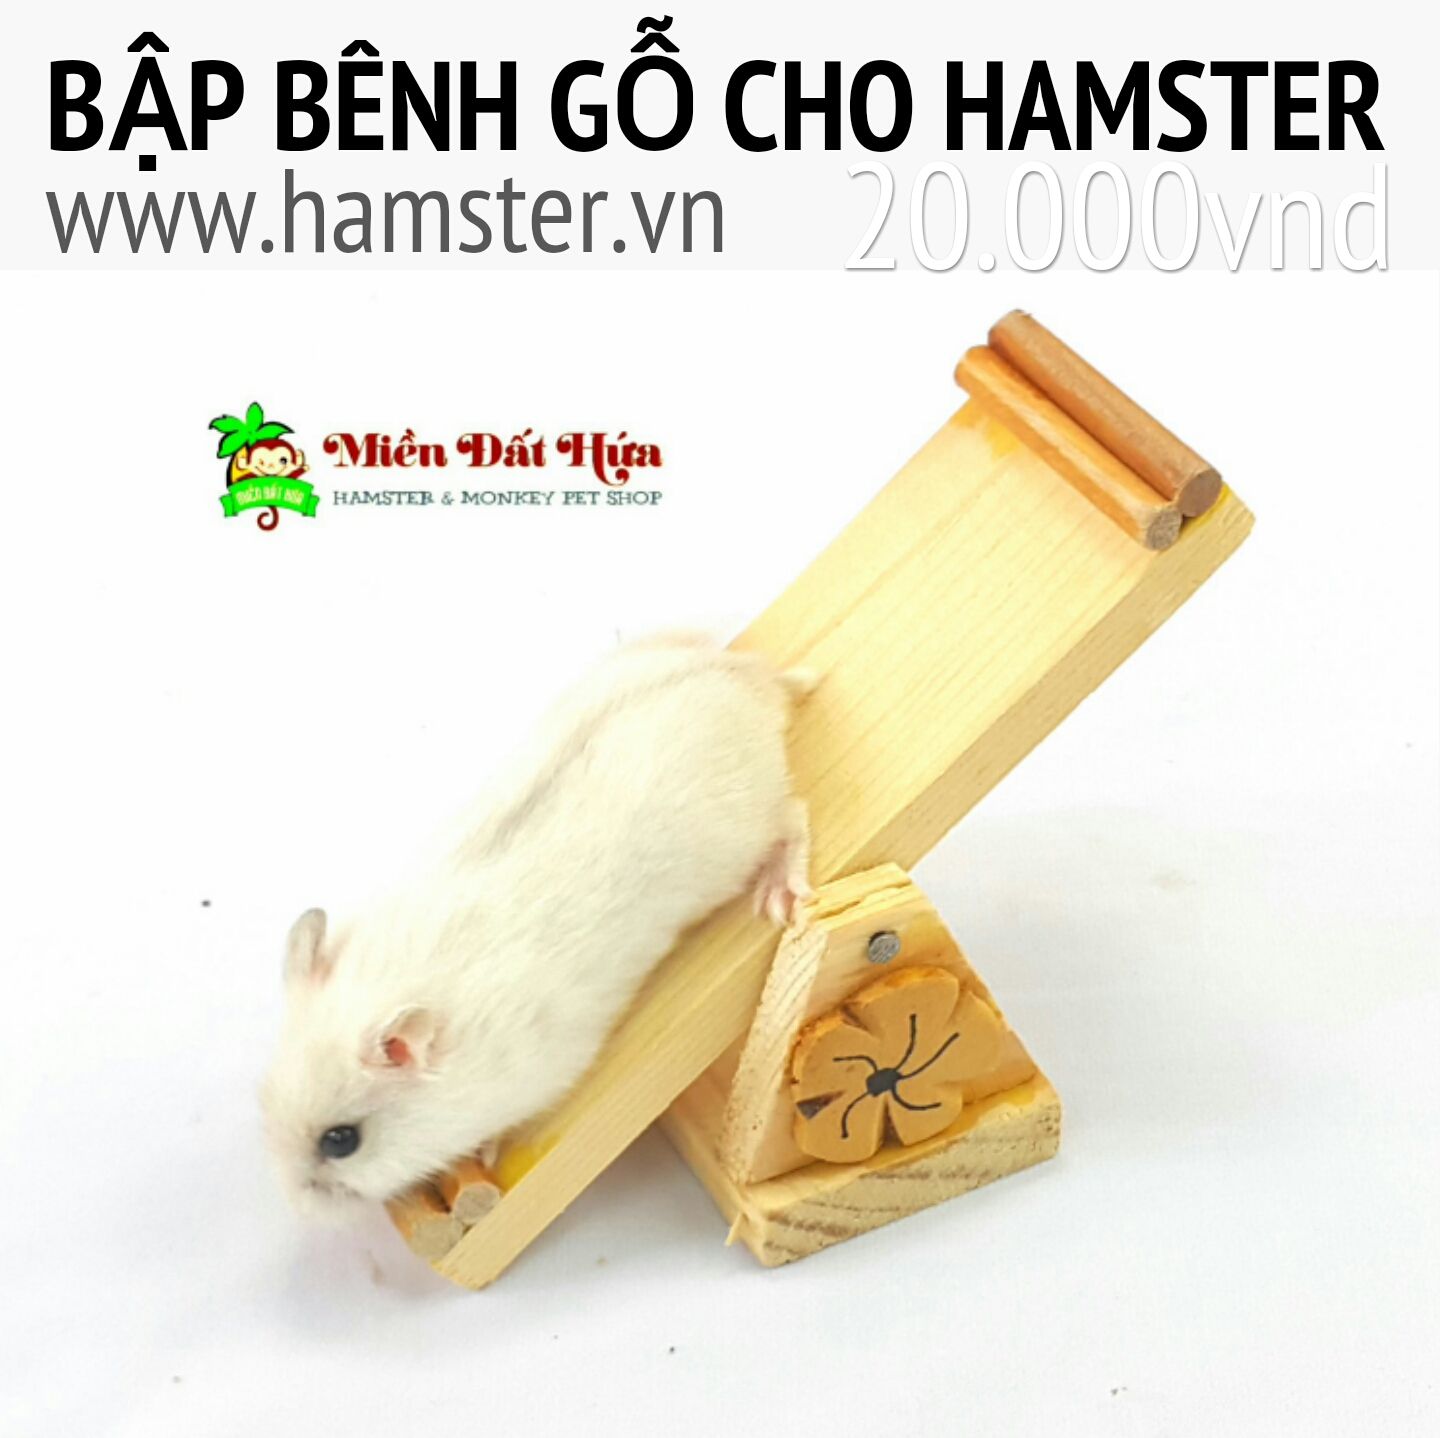 bập bênh gỗ cho hamster 30k